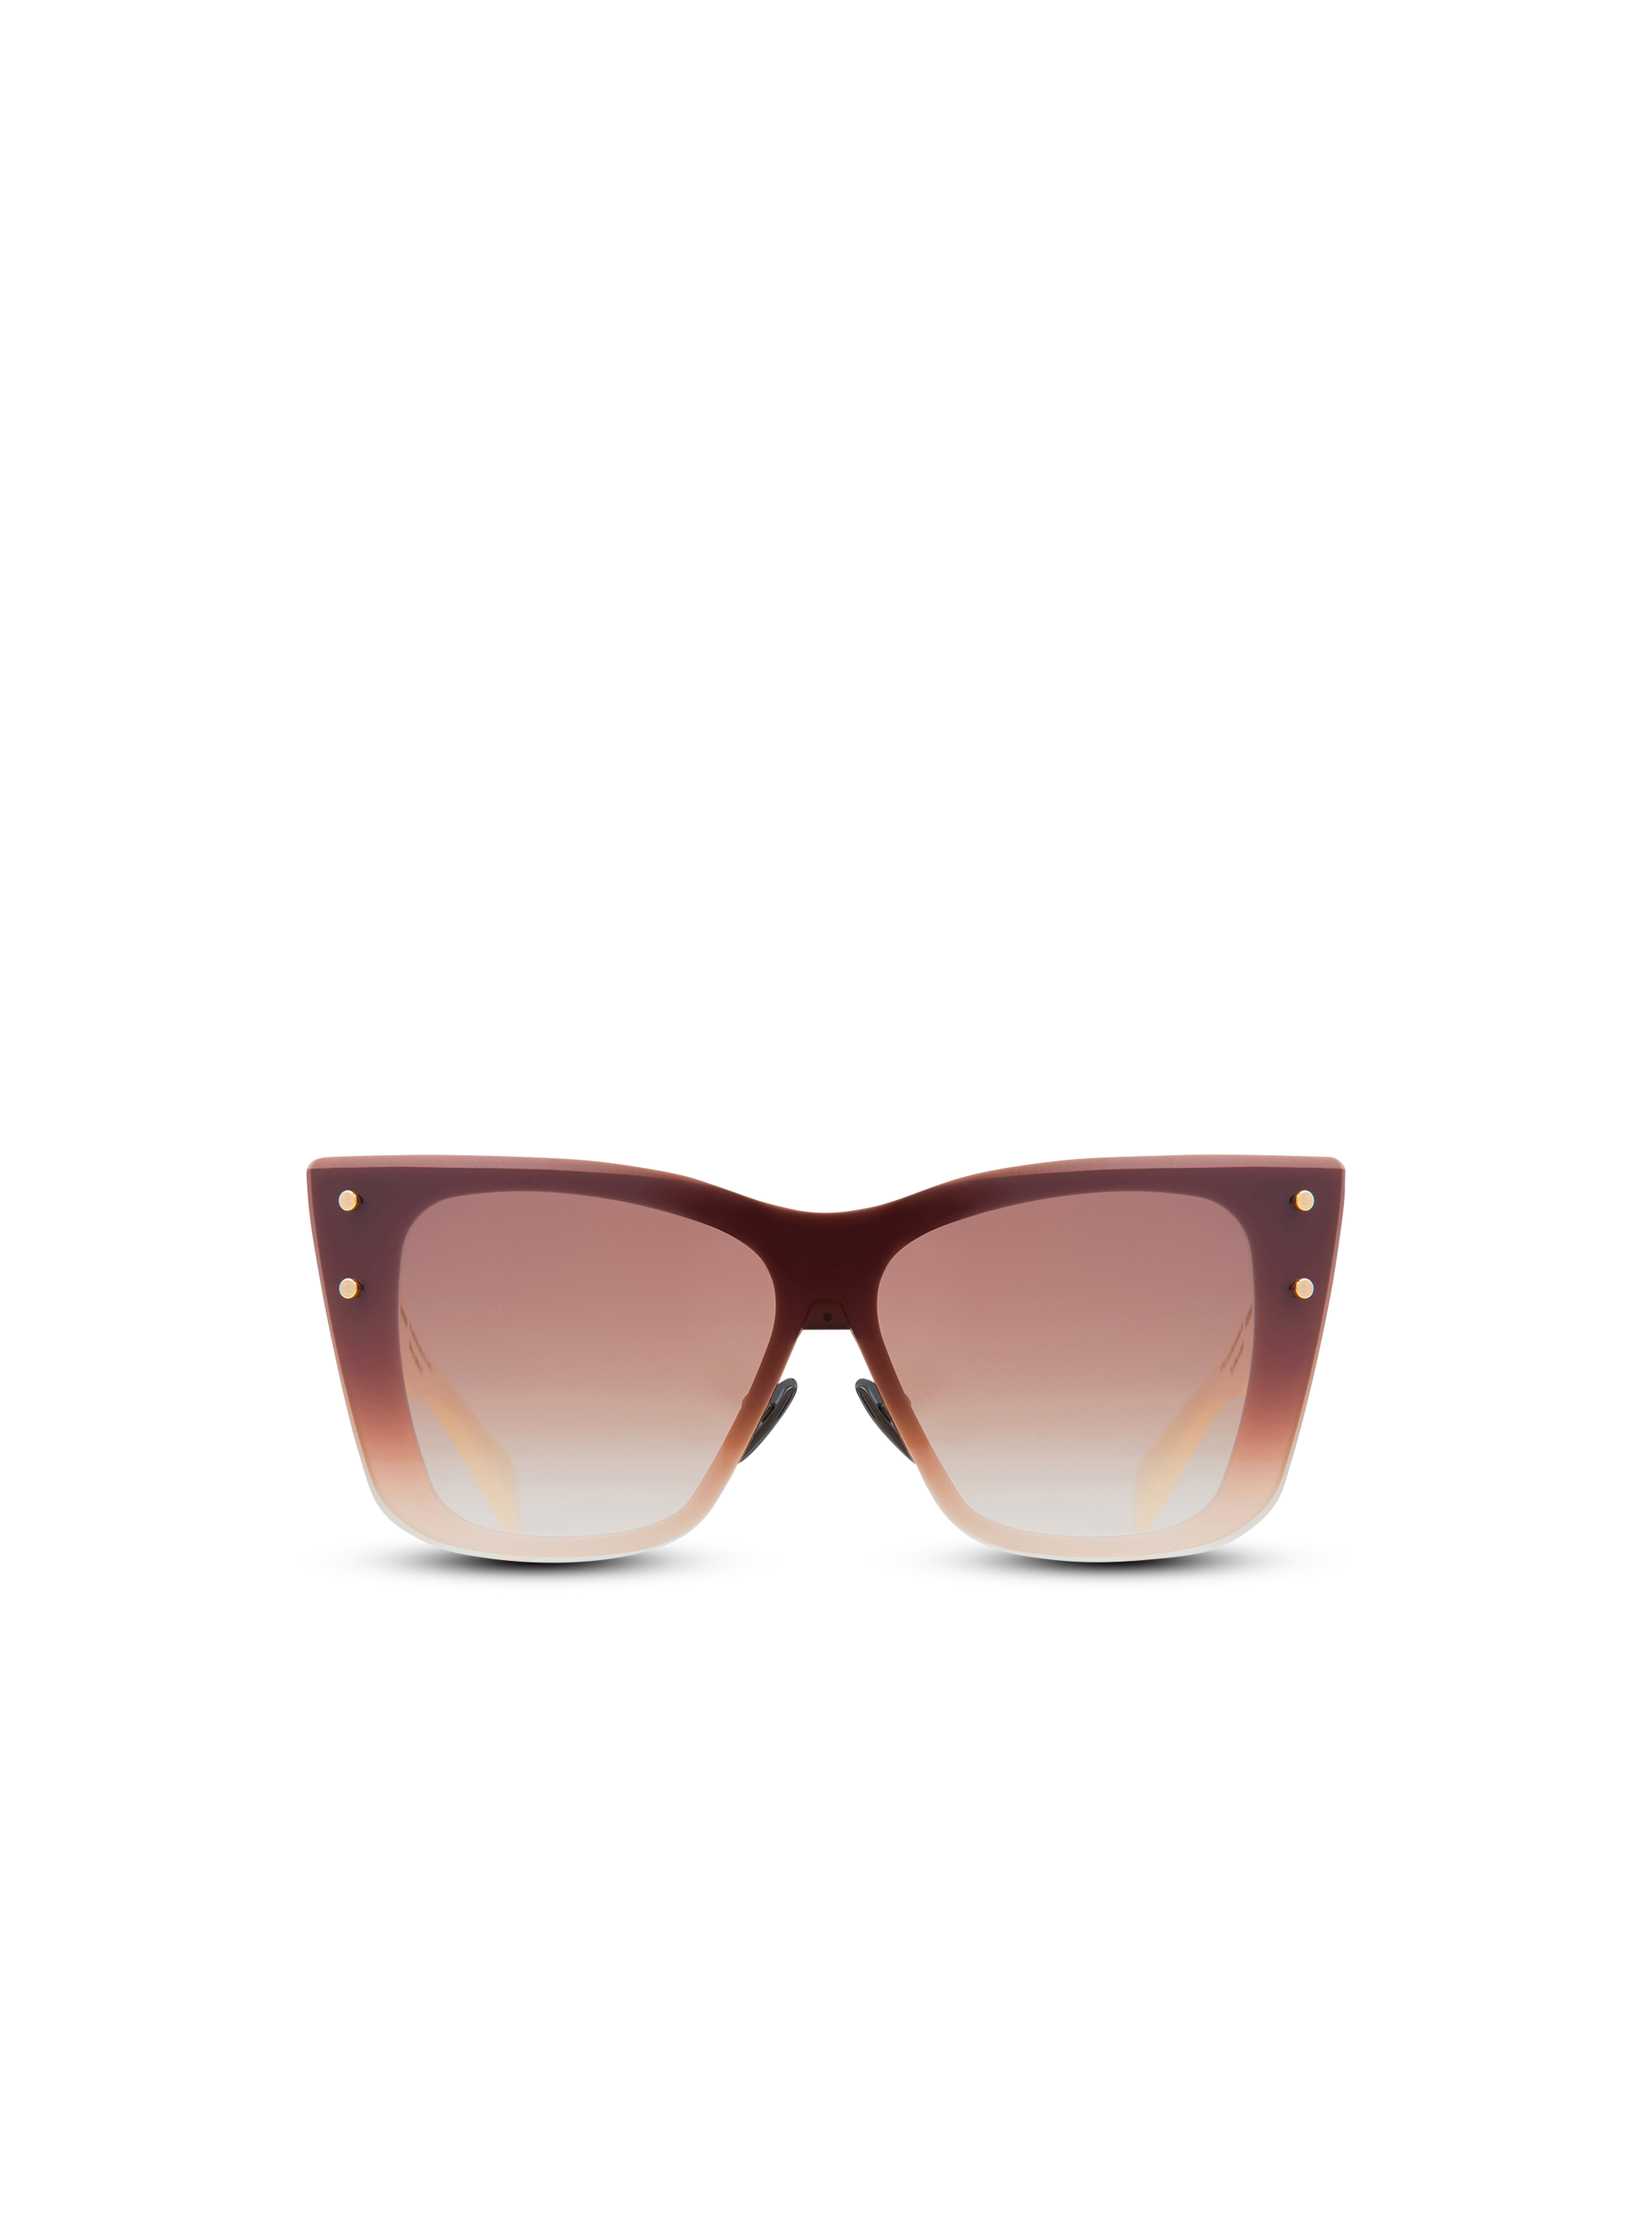 Tortoiseshell-effect titanium Armour sunglasses, white